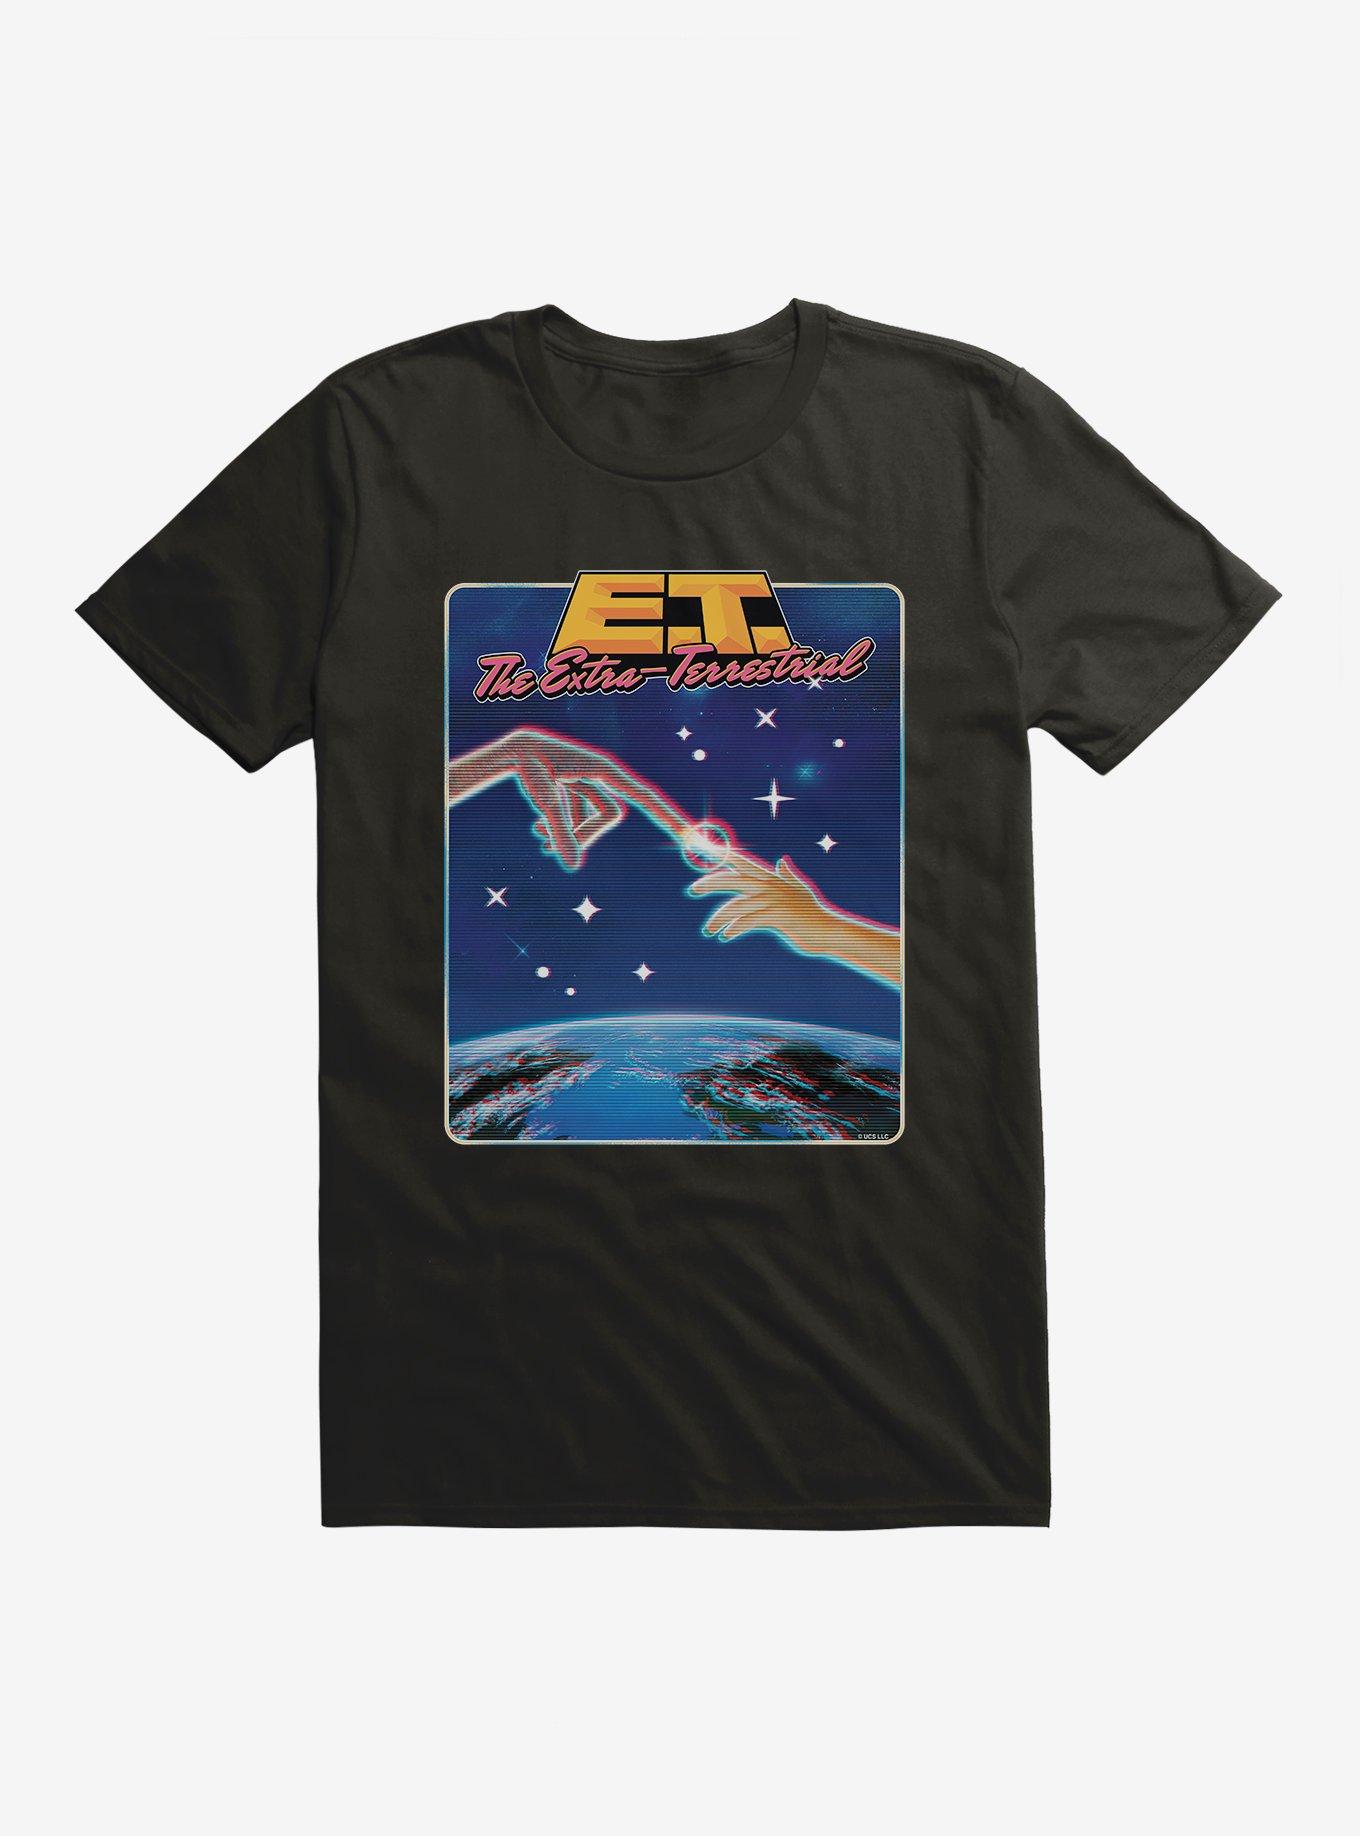 E.T. The Connection T-Shirt